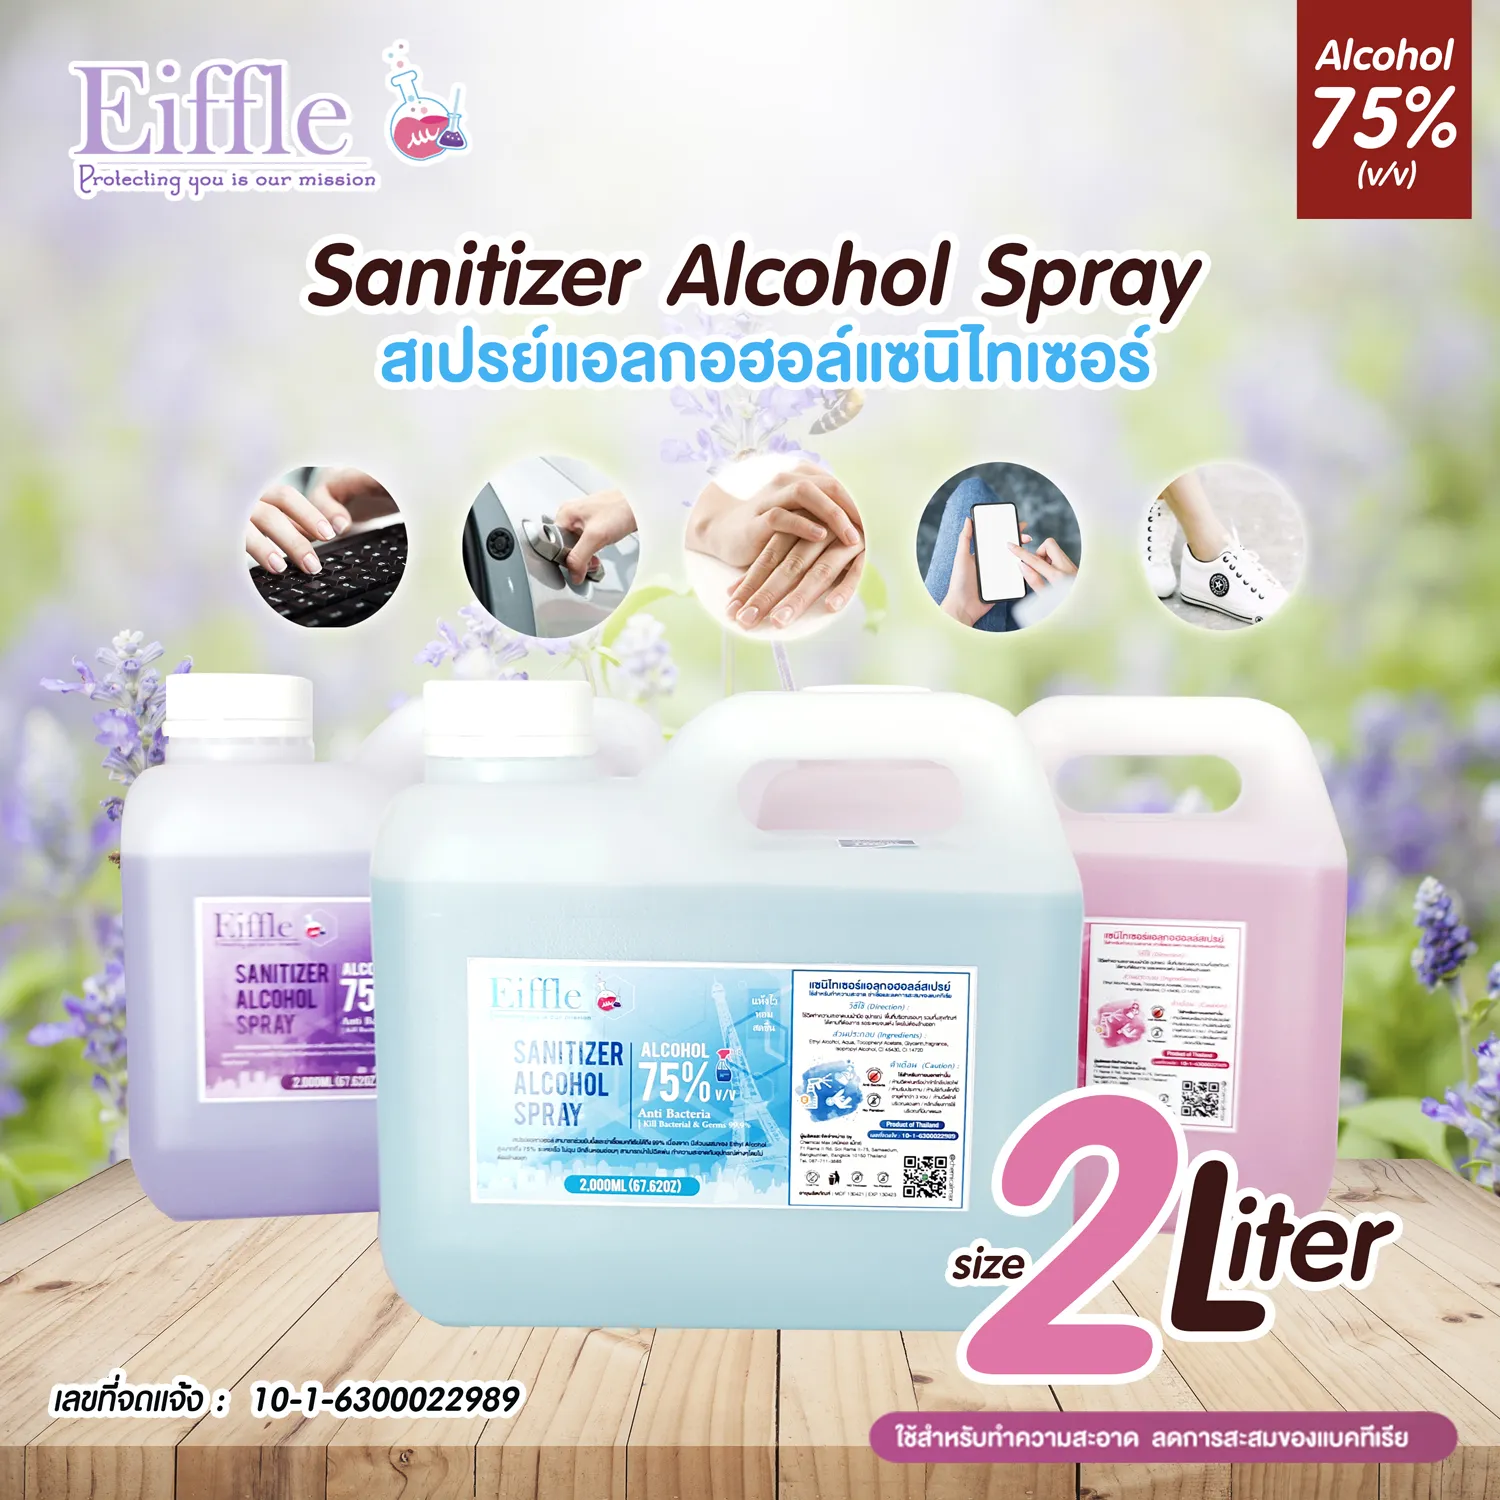 Eiffle - สเปรย์แอลกอฮอล์ ฆ่าเชื้อ 2 L สีชมพู สีม่วง Sanitizer Alcohol Spray 75% ขนาด 2 ลิตร มีเลขจดแจ้ง chemicalmax สเปรย์